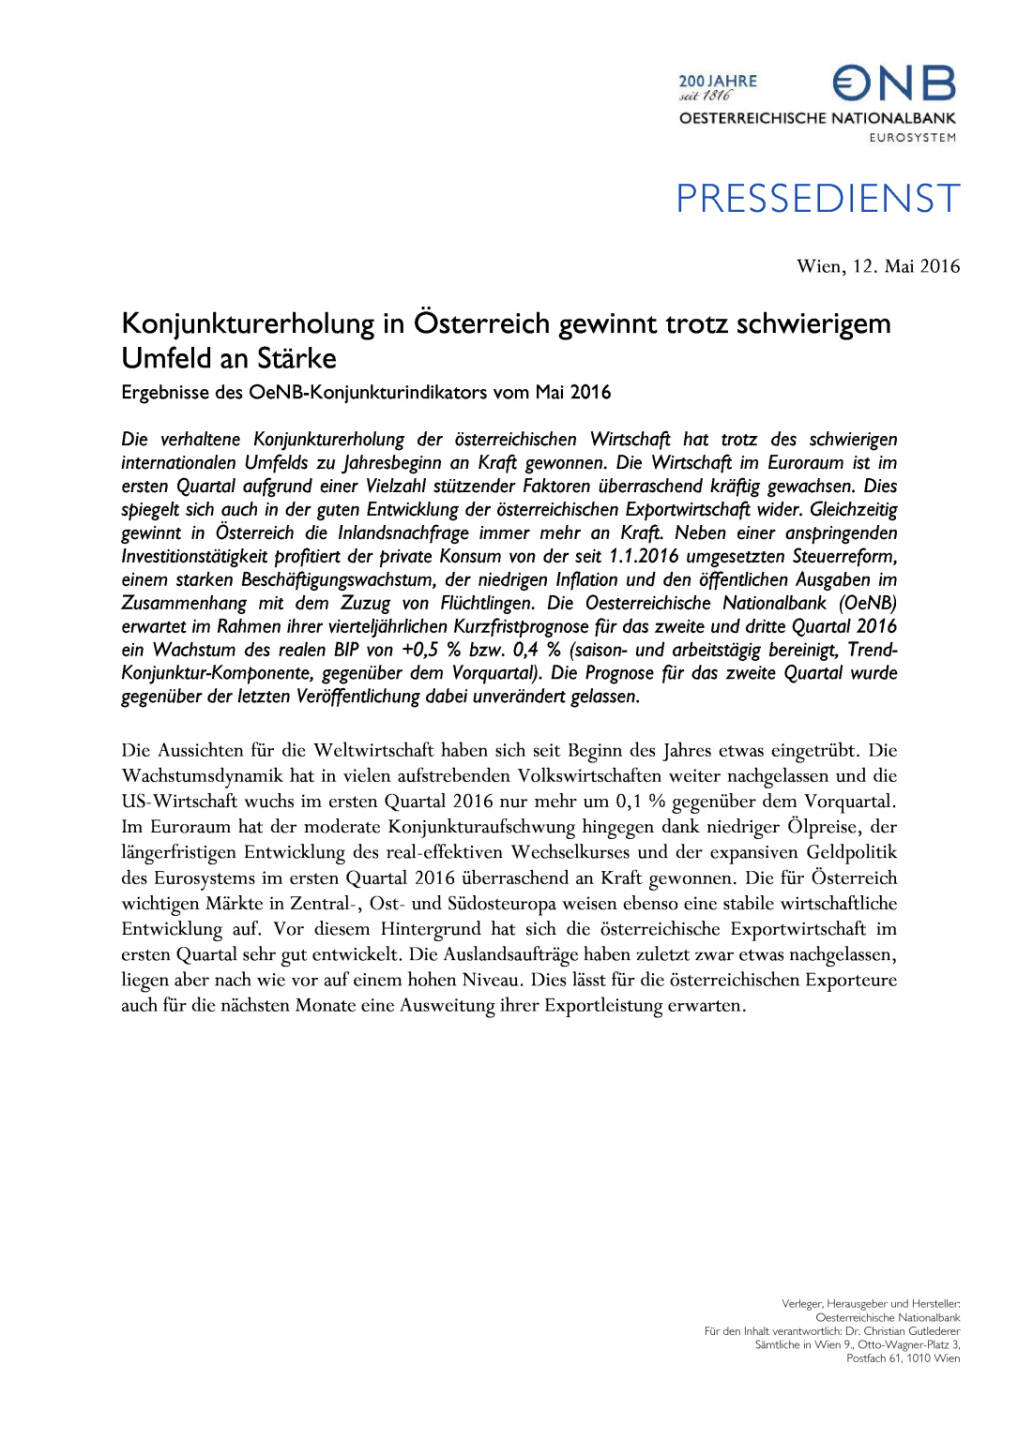 OeNB: Konjunkturerholung in Österreich, Seite 1/3, komplettes Dokument unter http://boerse-social.com/static/uploads/file_1050_oenb_konjunkturerholung_in_osterreich.pdf